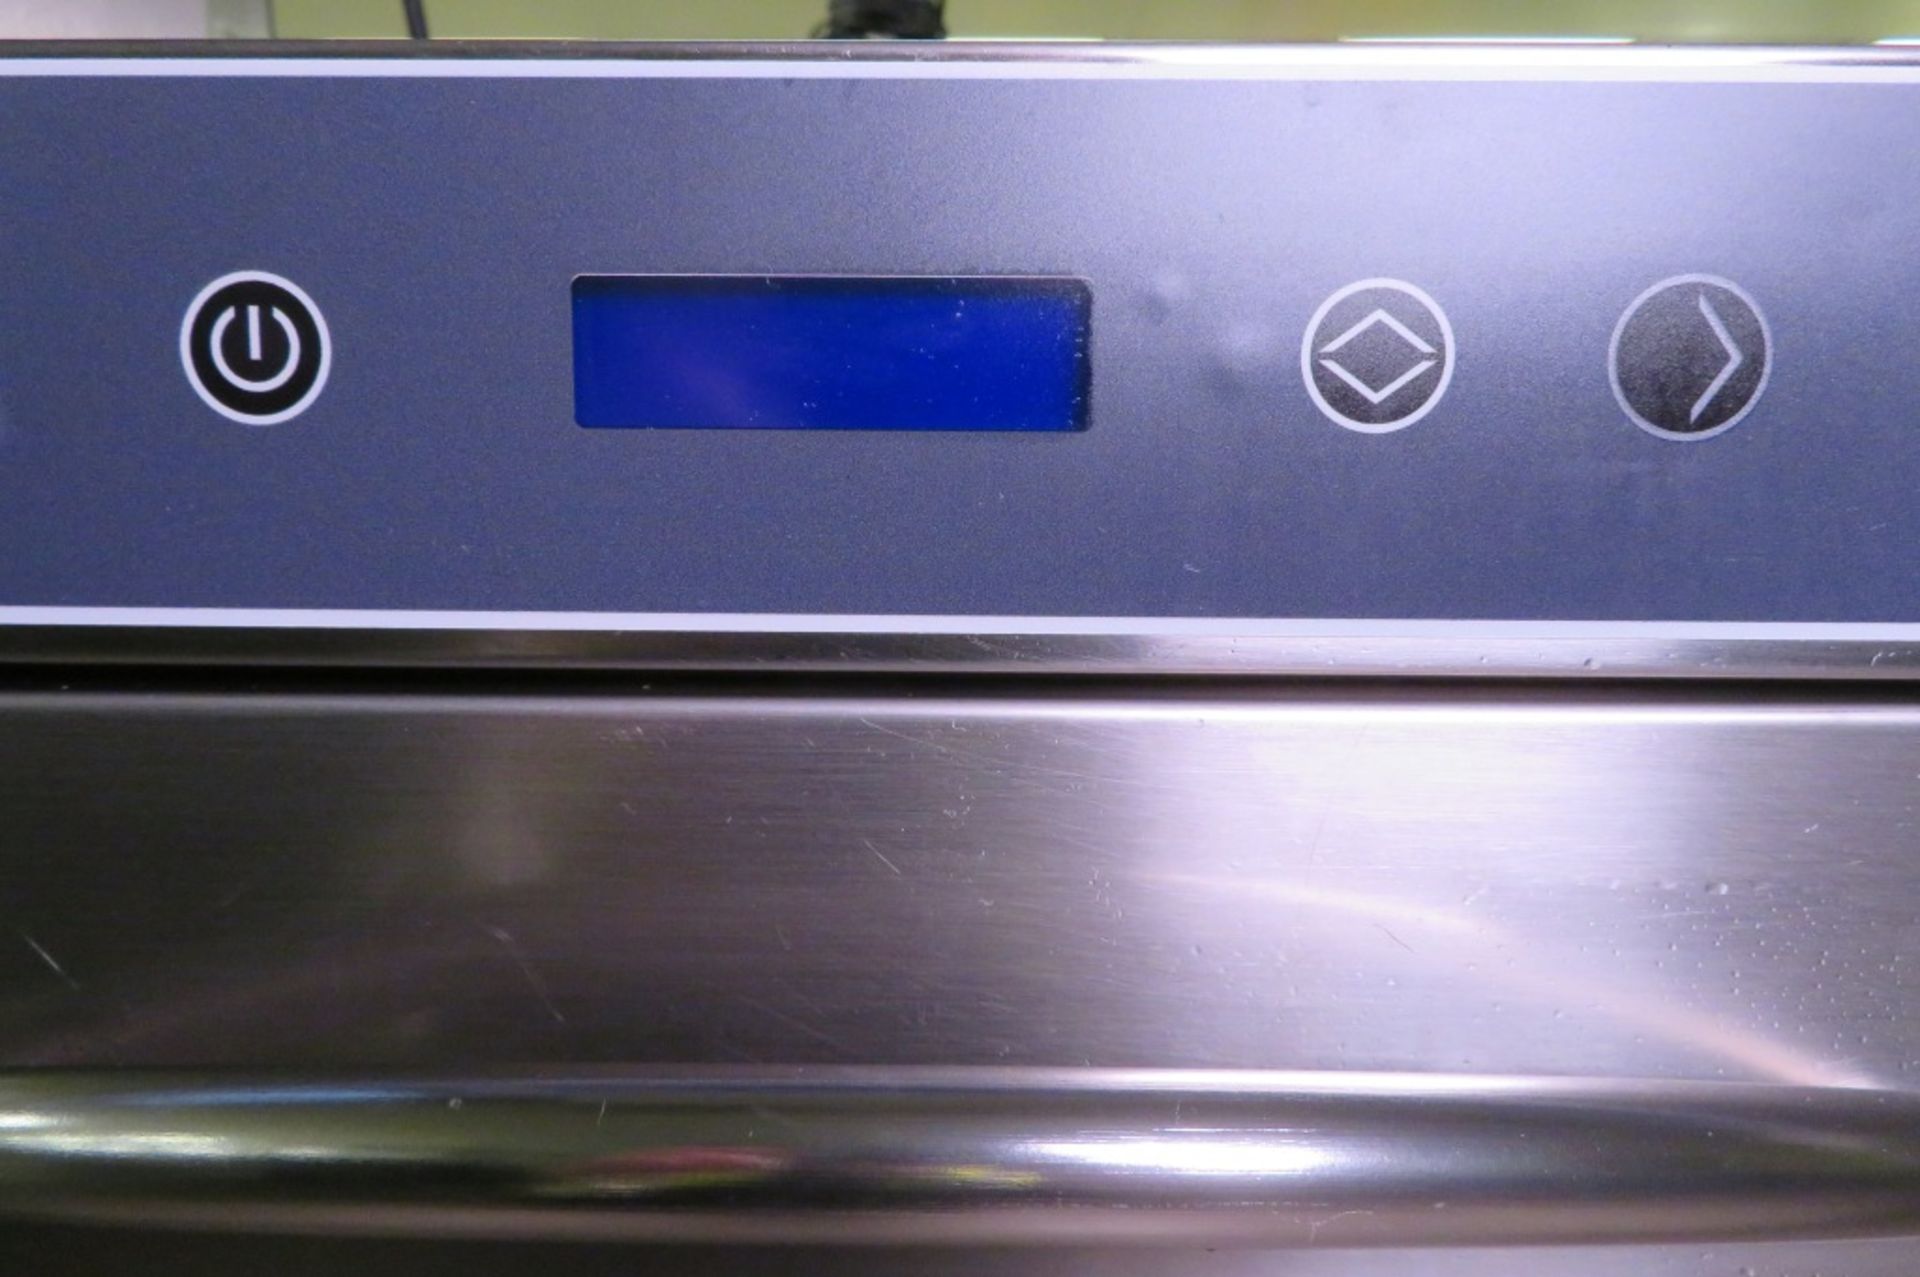 Maidaid Evolution 505WS dishwasher. - Image 2 of 5